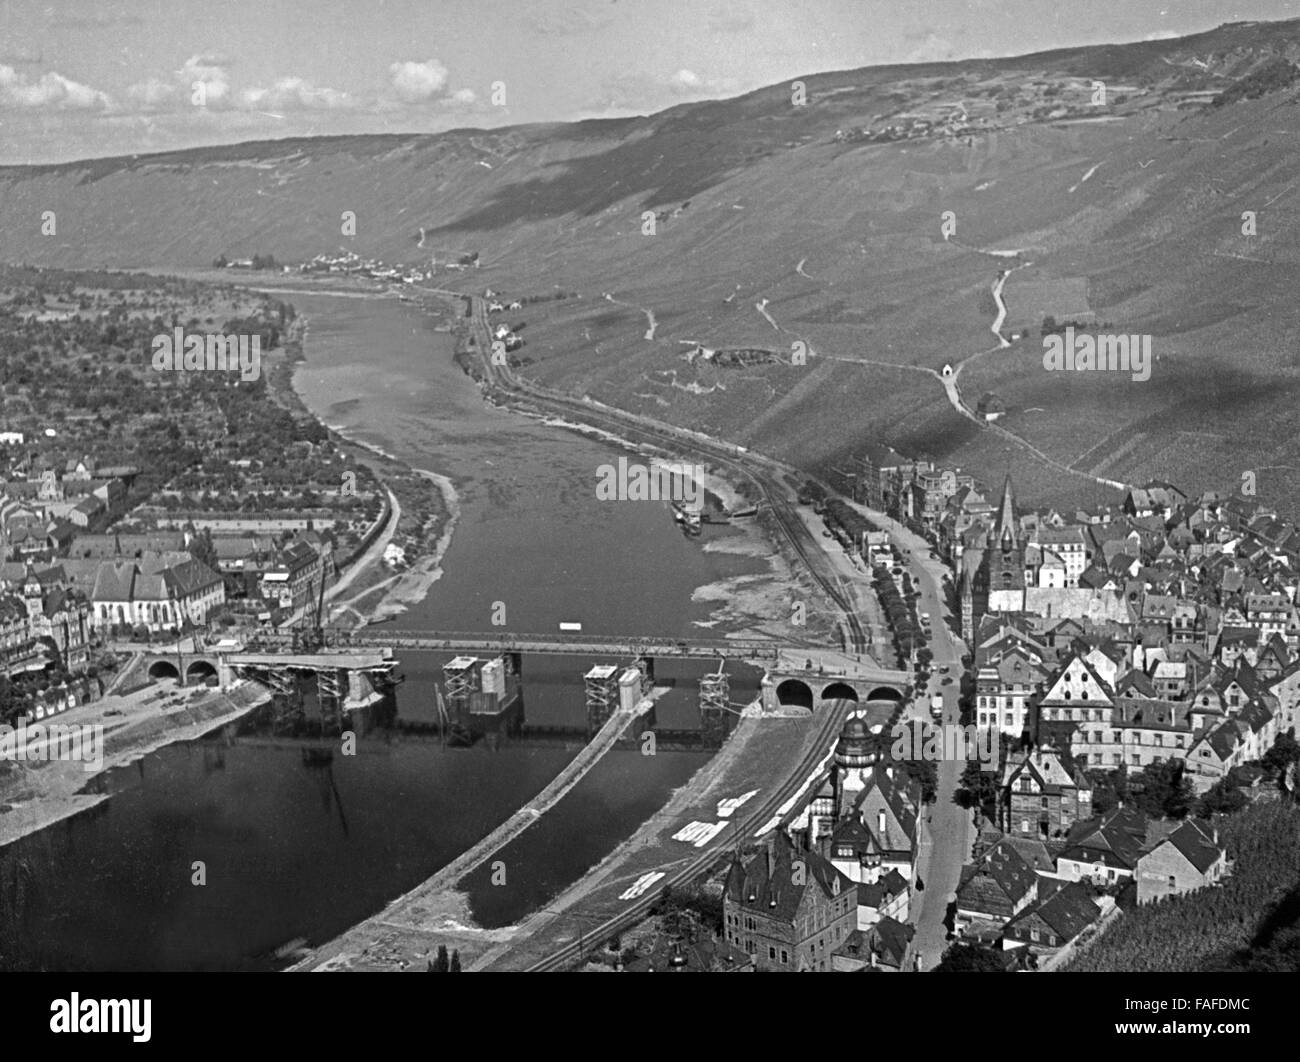 Blick auf Bernkastel (rechts) und Kues (links) an der Mosel, Deutschland 1930er Jahre. Vista di Bernkastel (destra) e Kues (sinistra) al fiume Mosella, Germania 1930s. Foto Stock